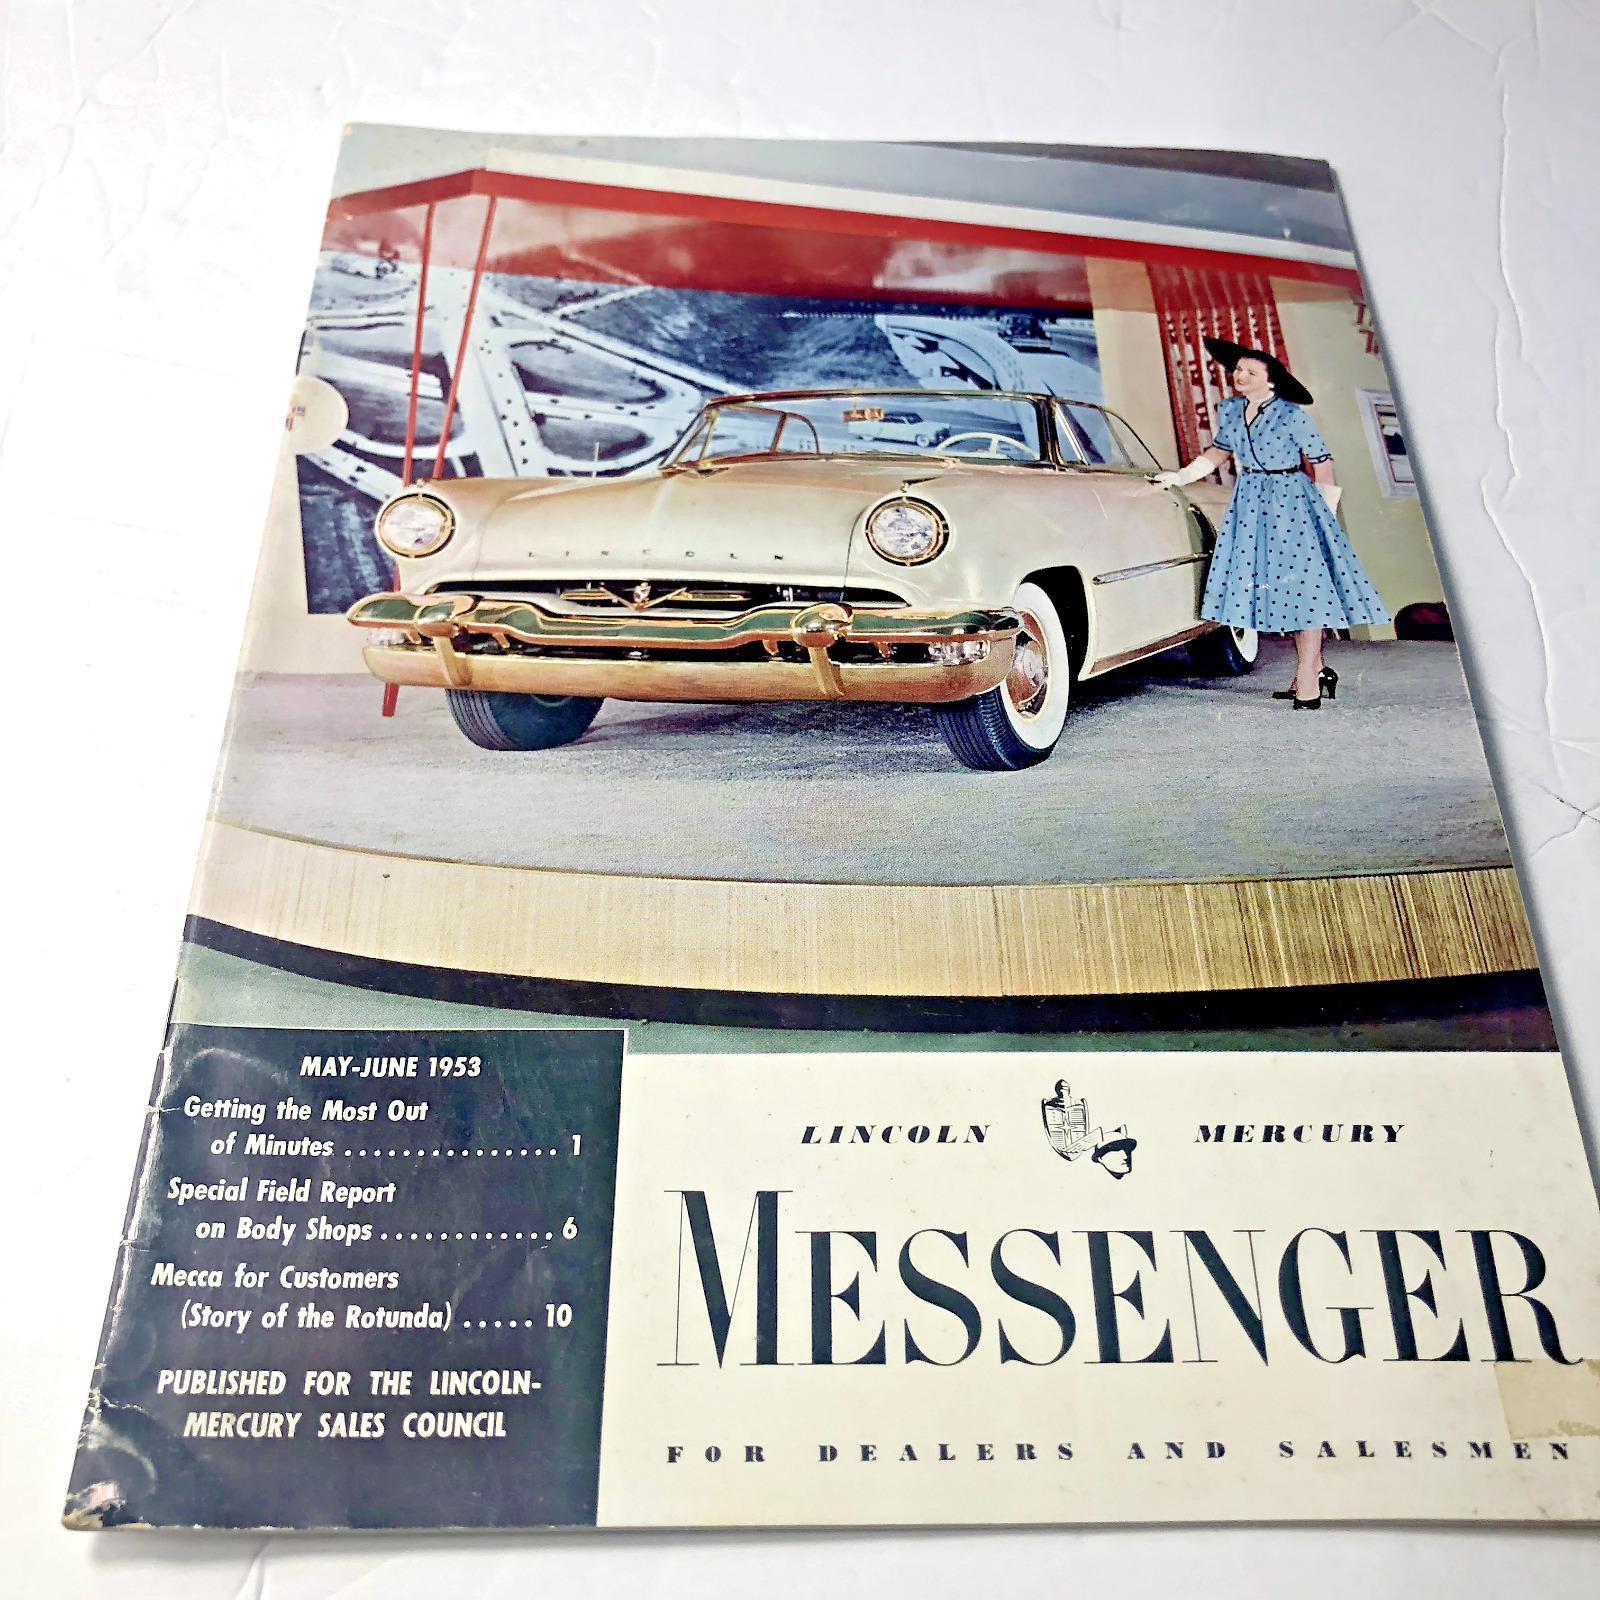 1953 Lincoln-Mercury Messenger magazine, May-June